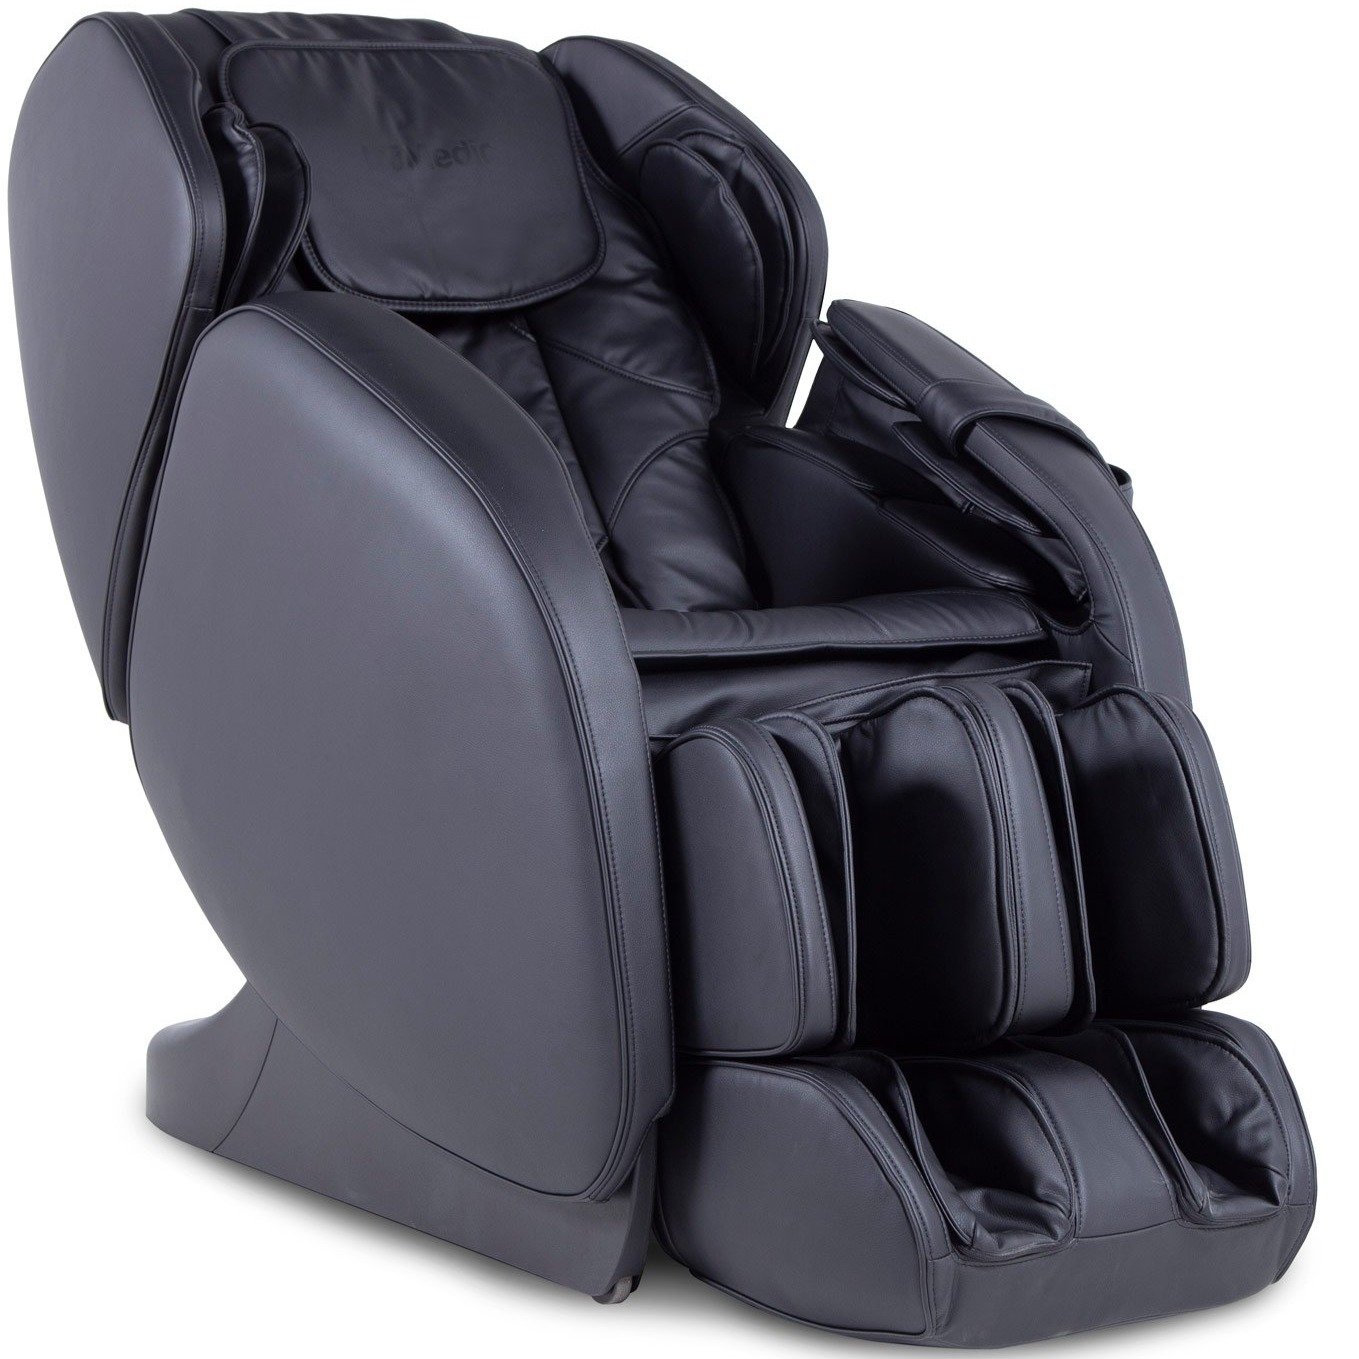 Massage Chair Comparison Trumedic Support Center